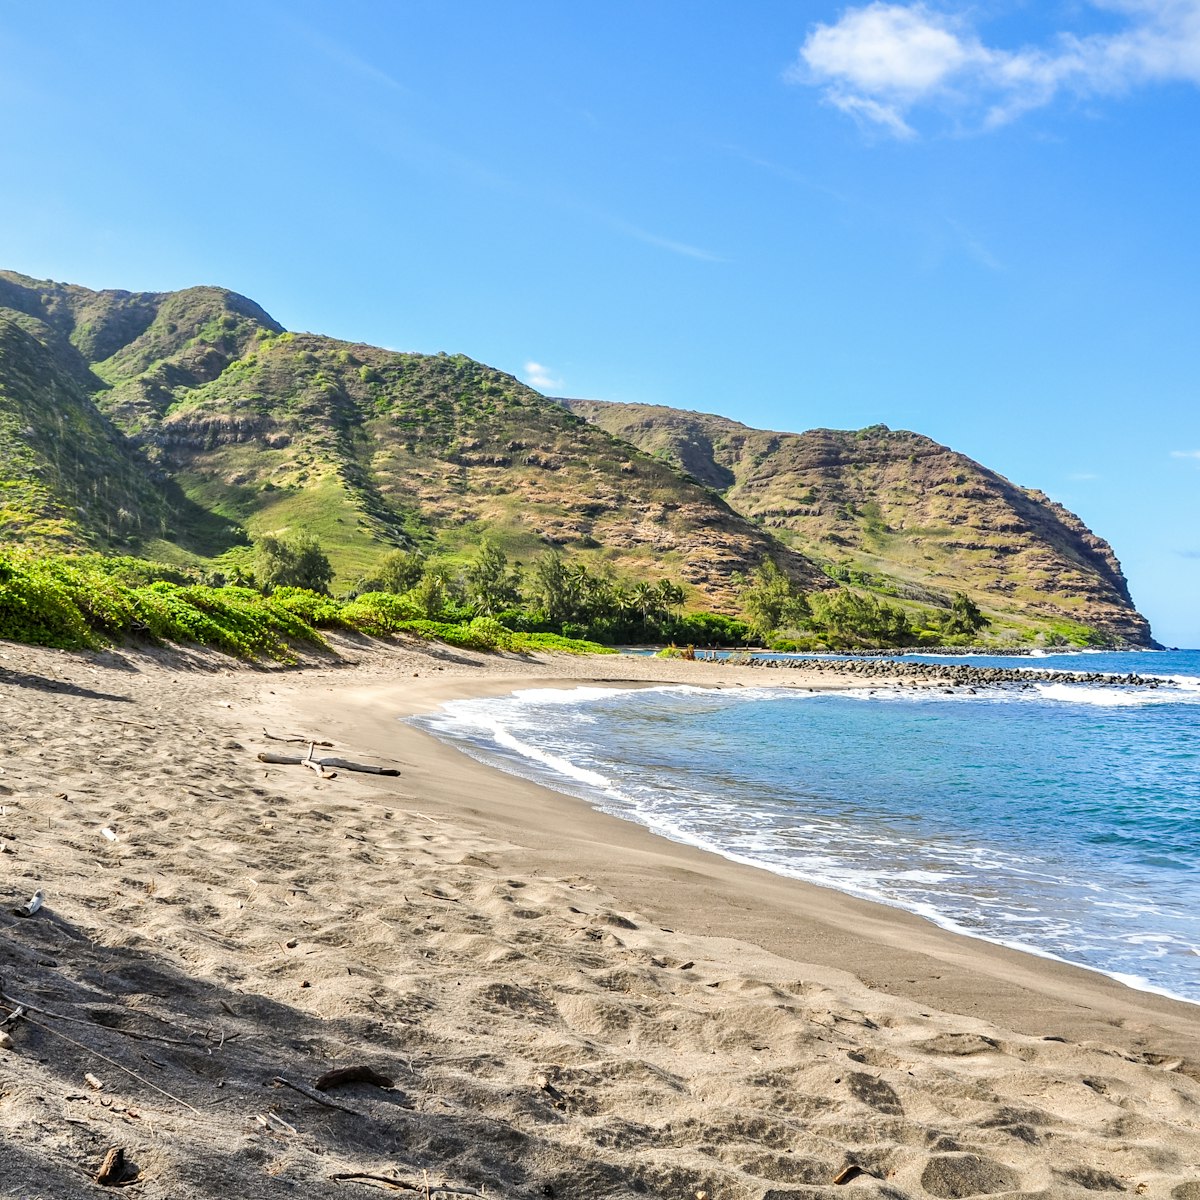  View of Halawa Beach Park and the Halawa Valley on the island of Moloka'i, Hawaii.